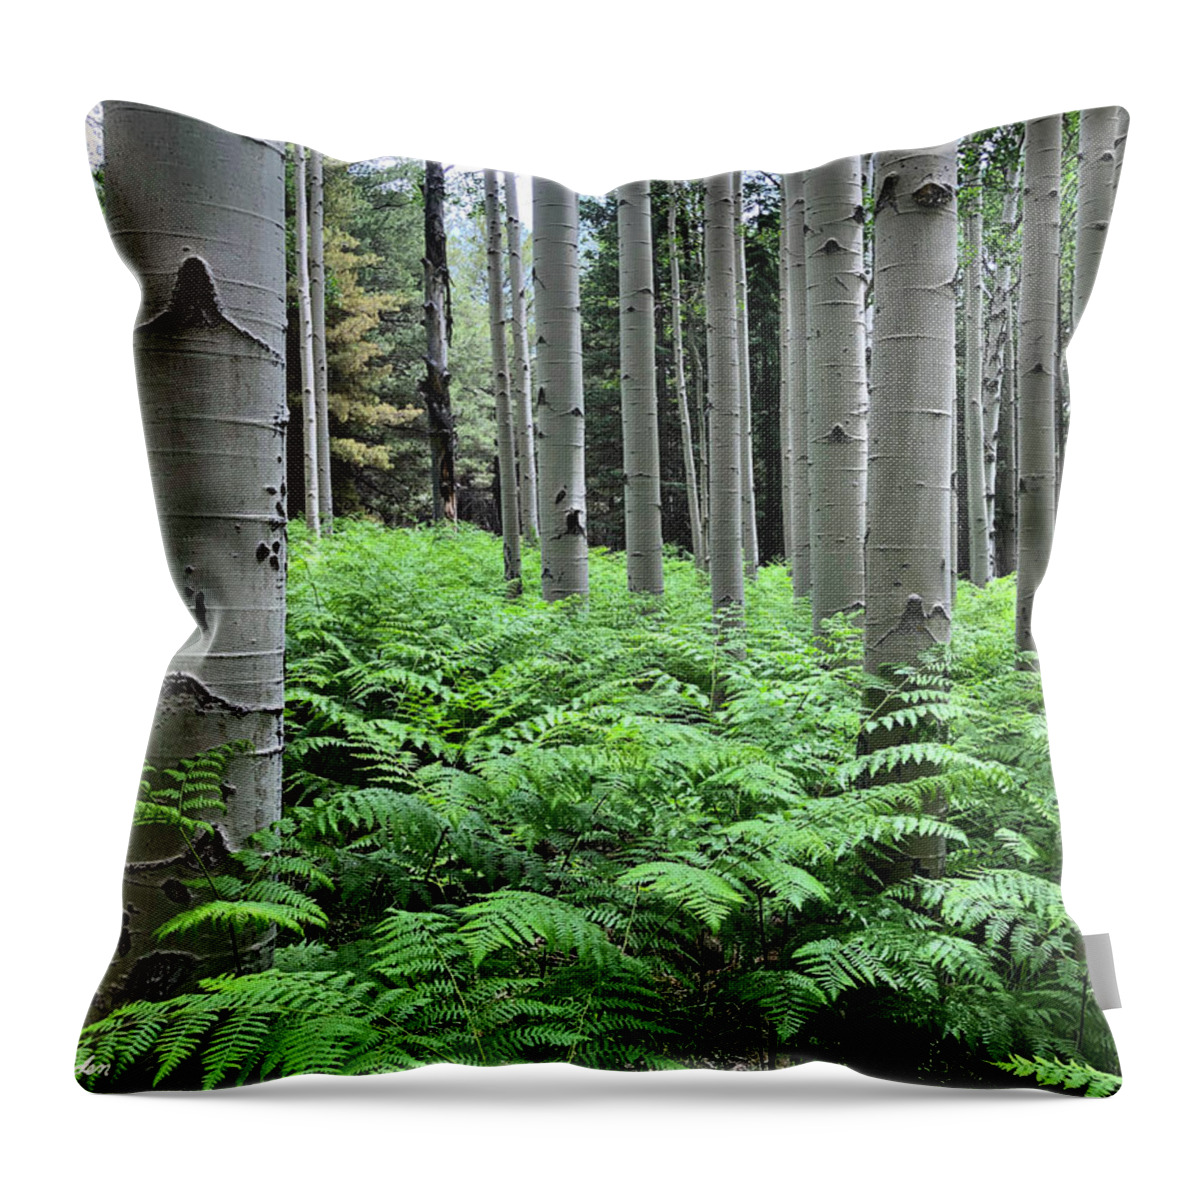 Arizona Throw Pillow featuring the photograph Ferns in an Aspen Grove by Jeff Goulden